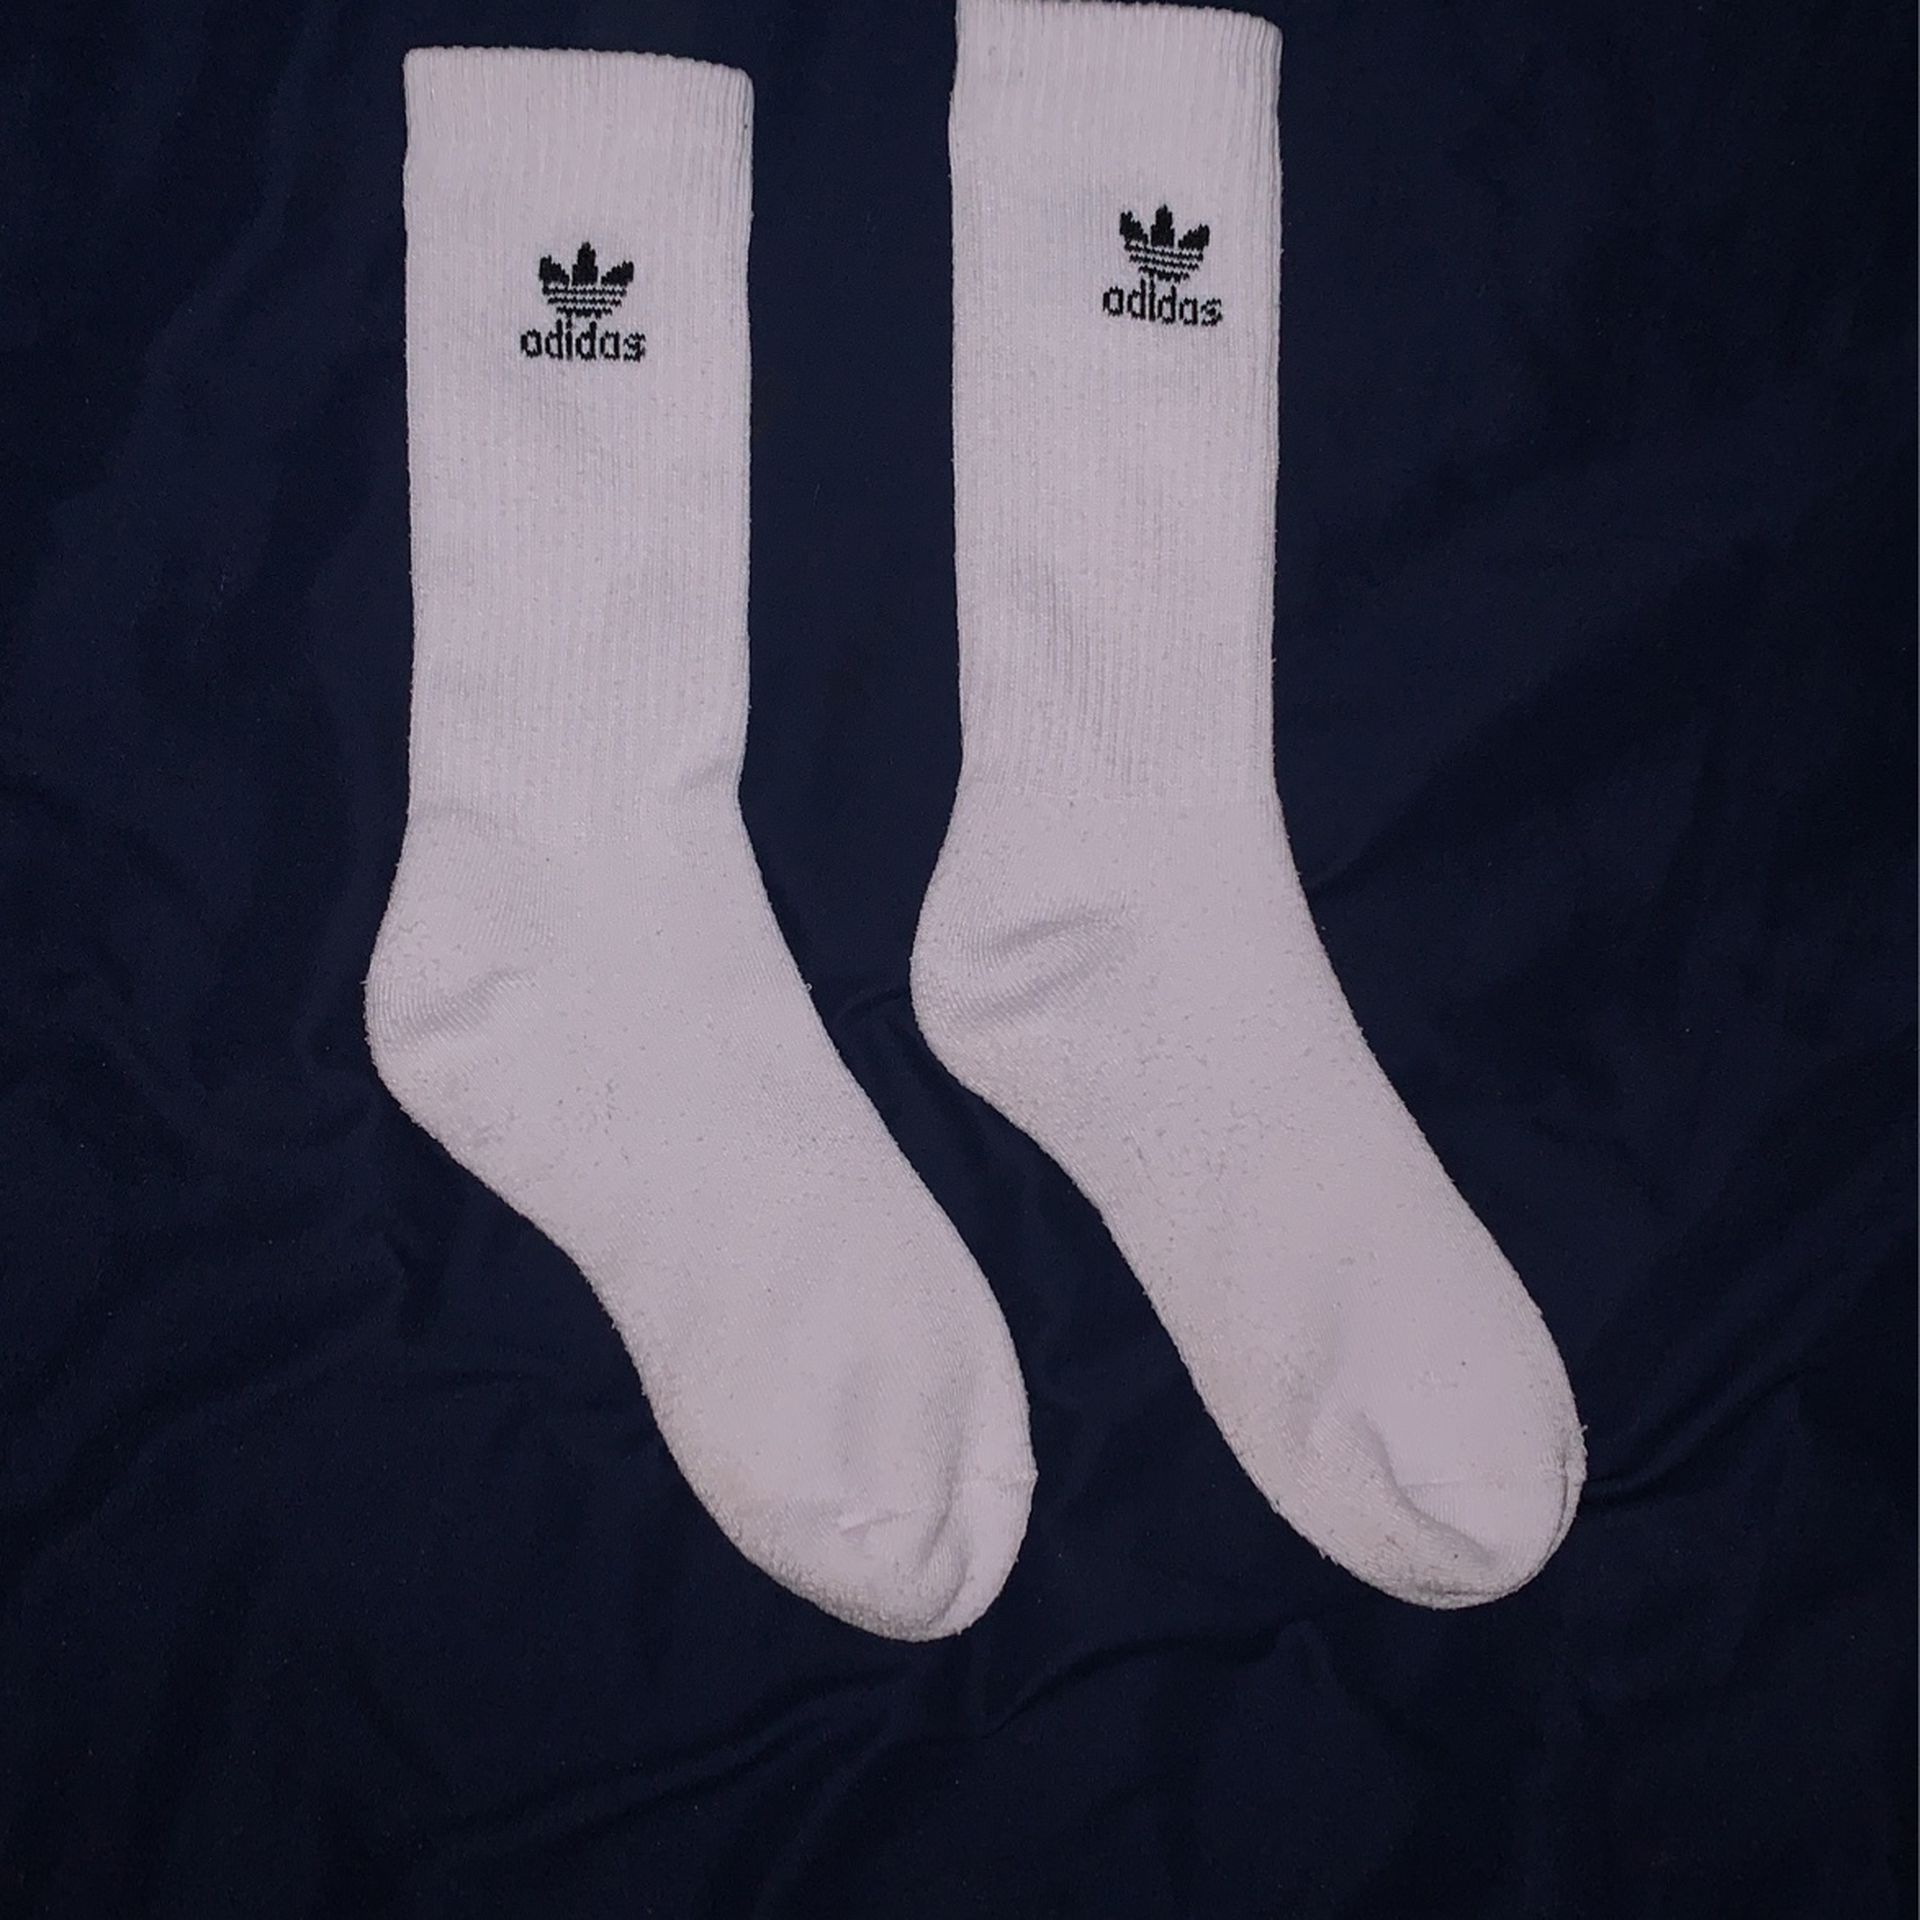 ADIDAS White Socks 🧦 